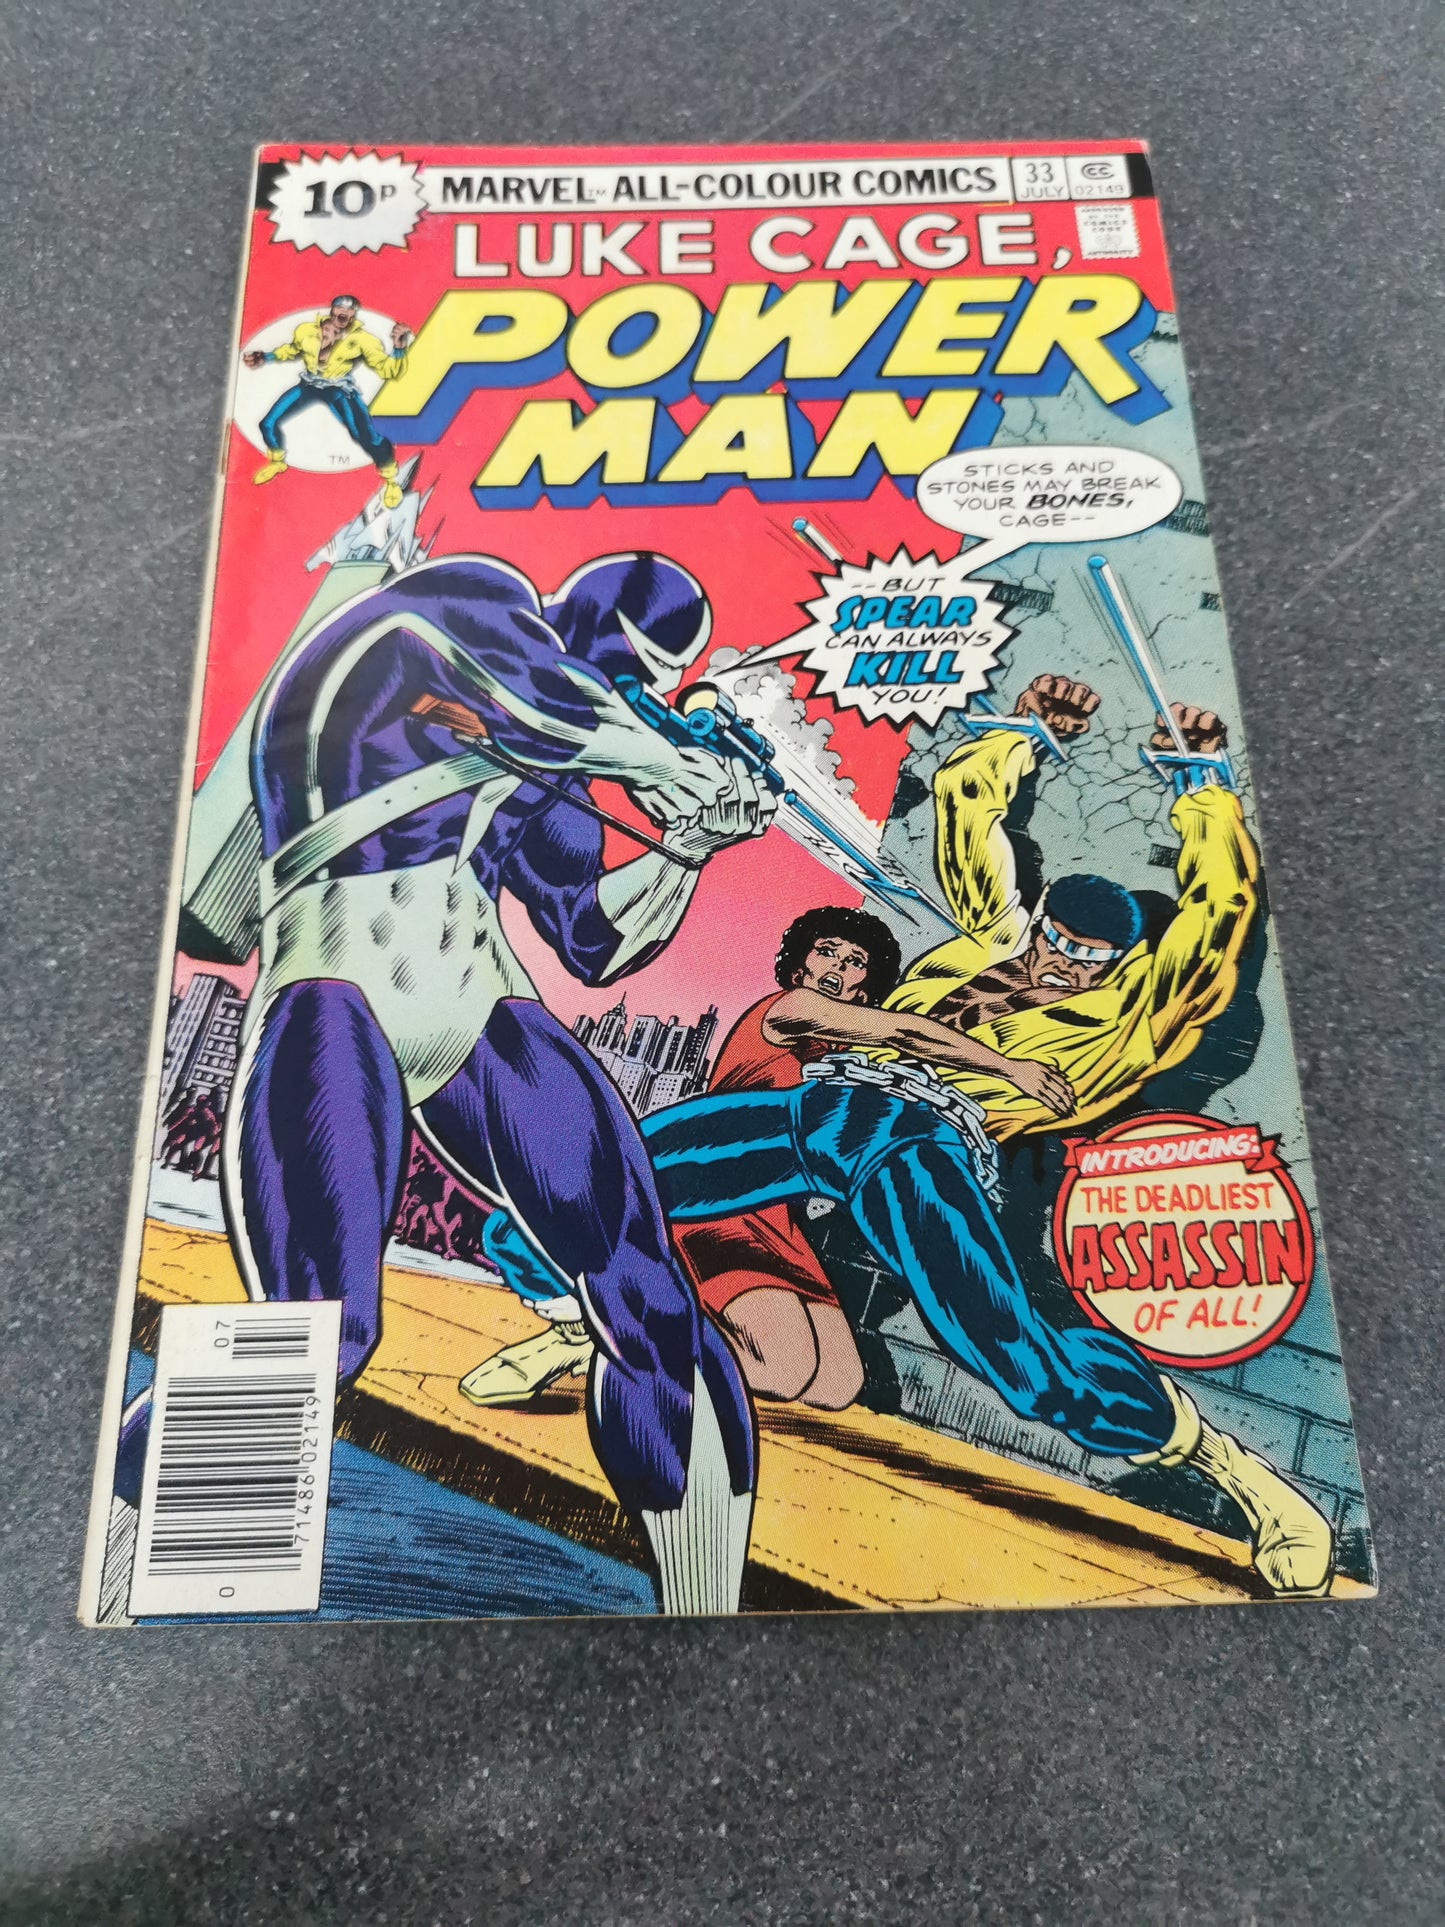 Power Man #33 1976 Marvel comic